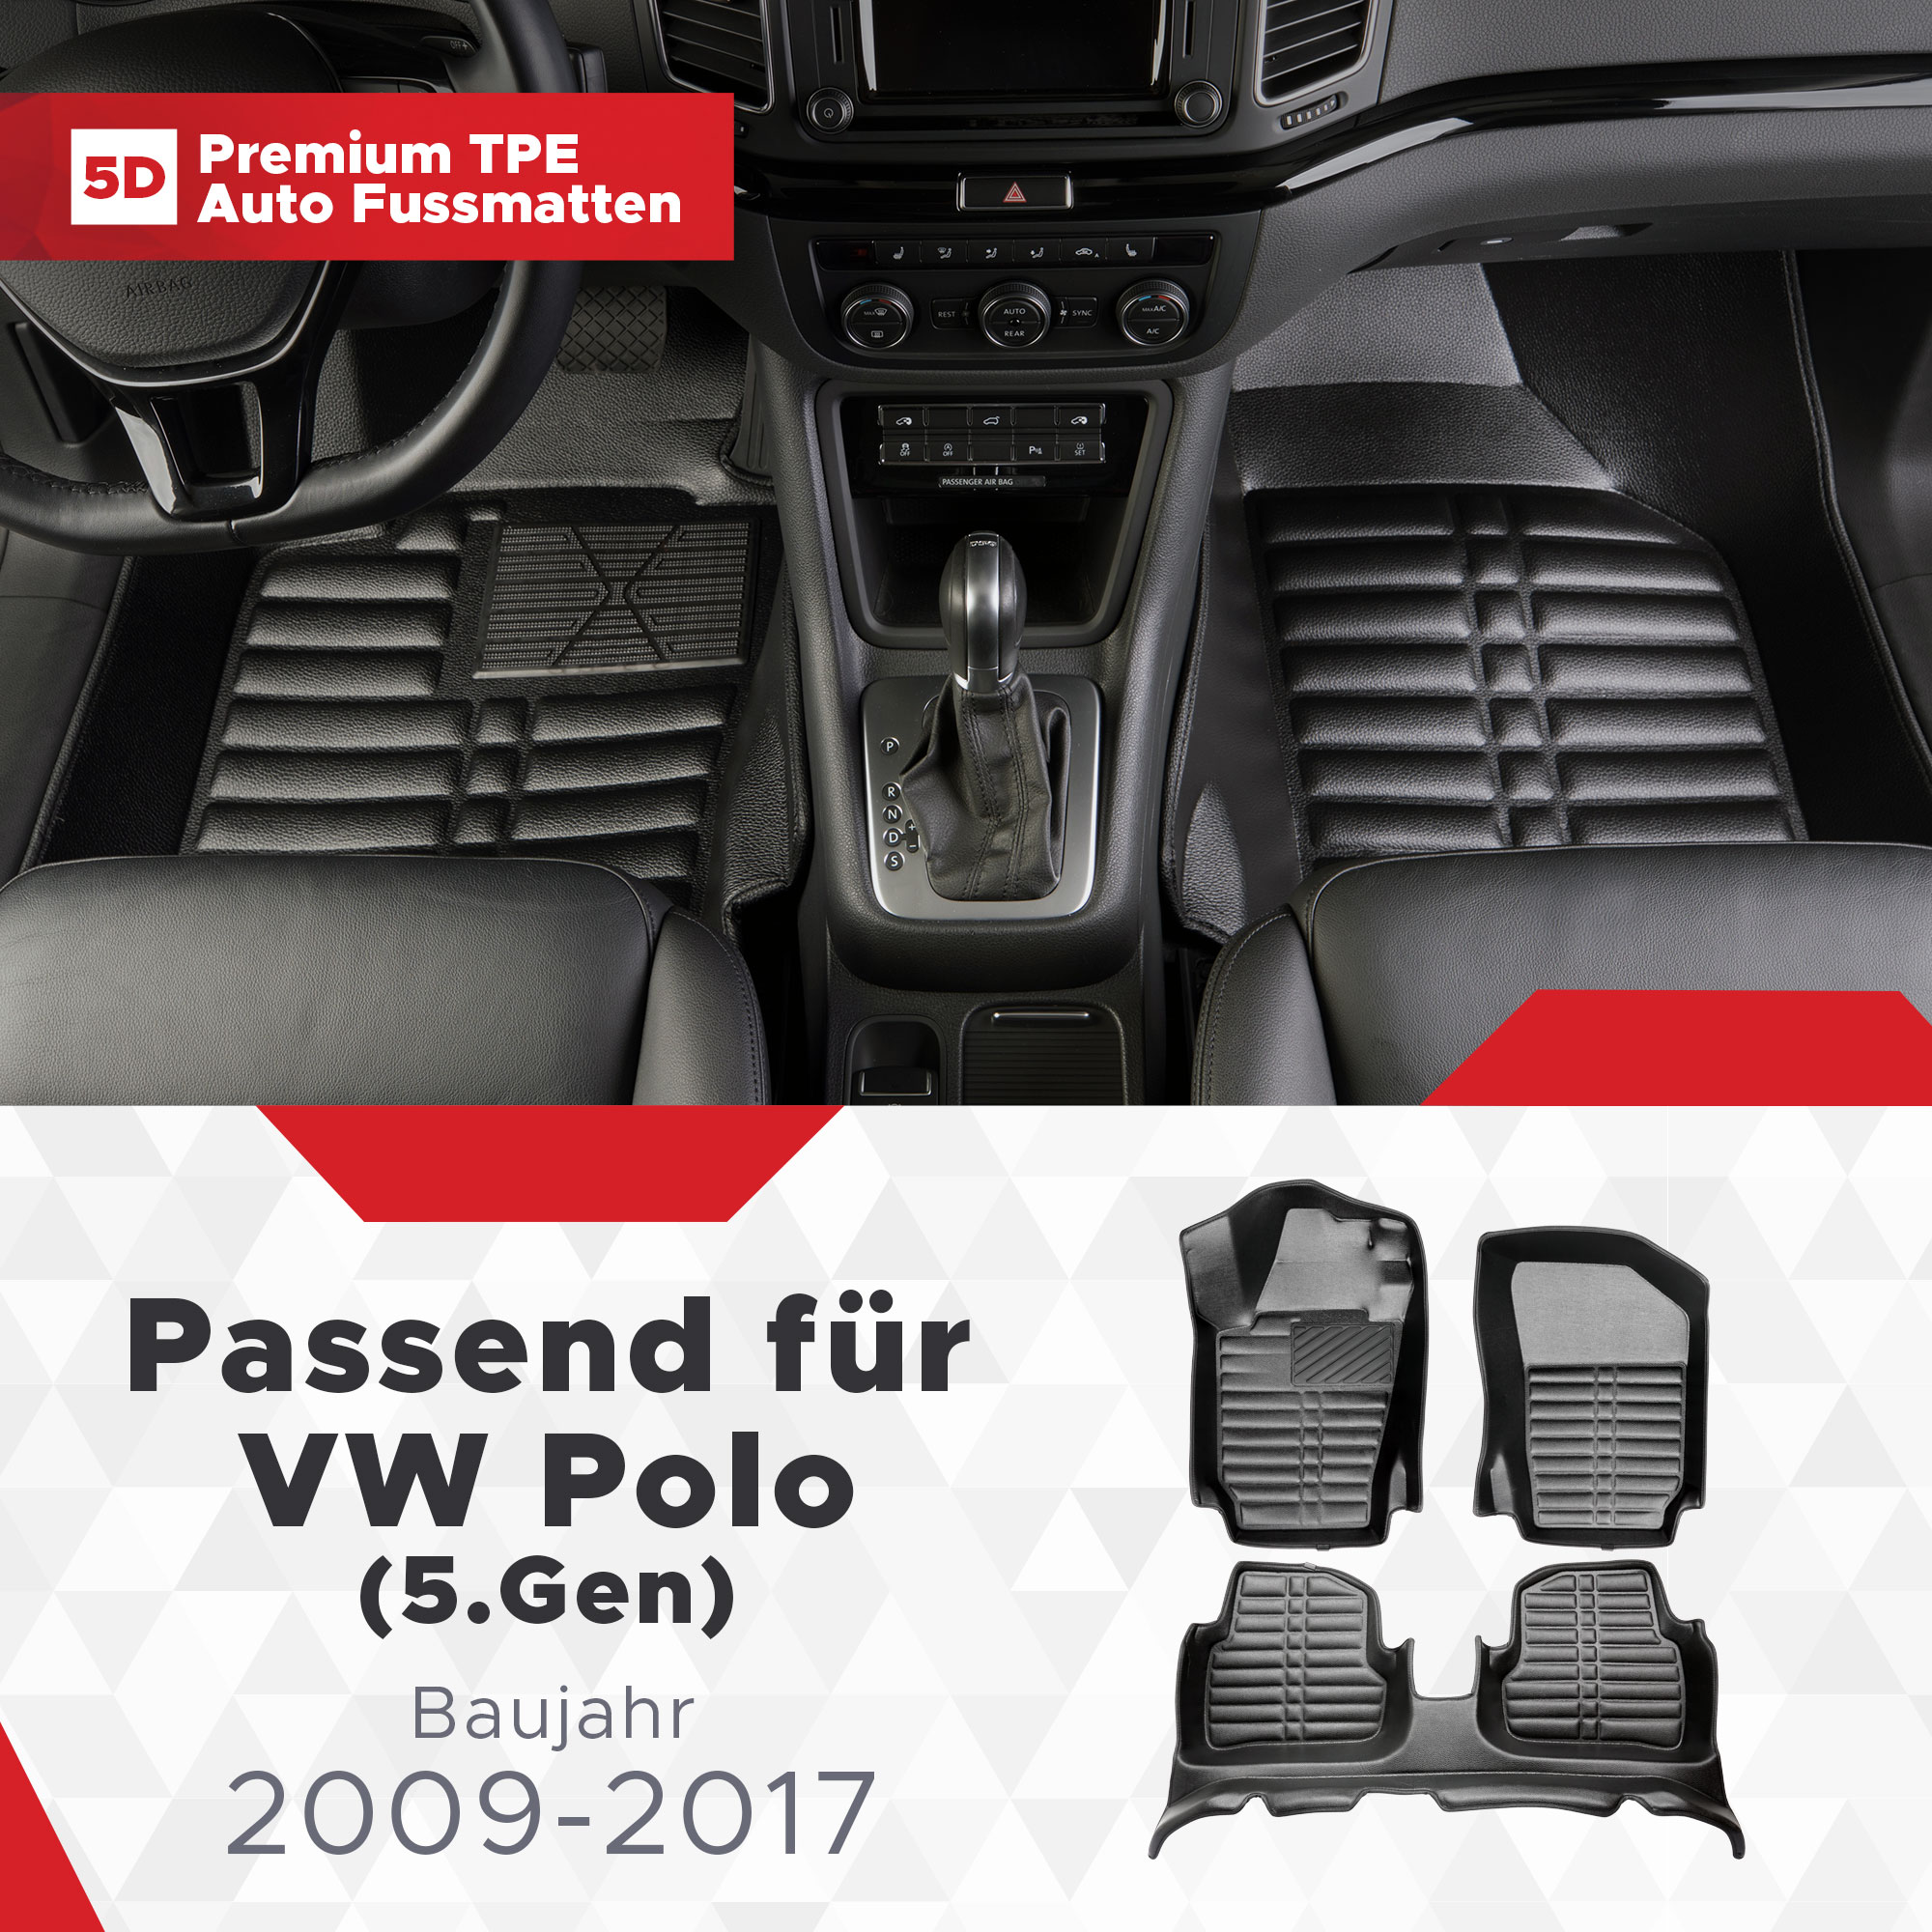 5D VW Polo (5.Gen) Fussmatten Bj 2009-2017 TPE